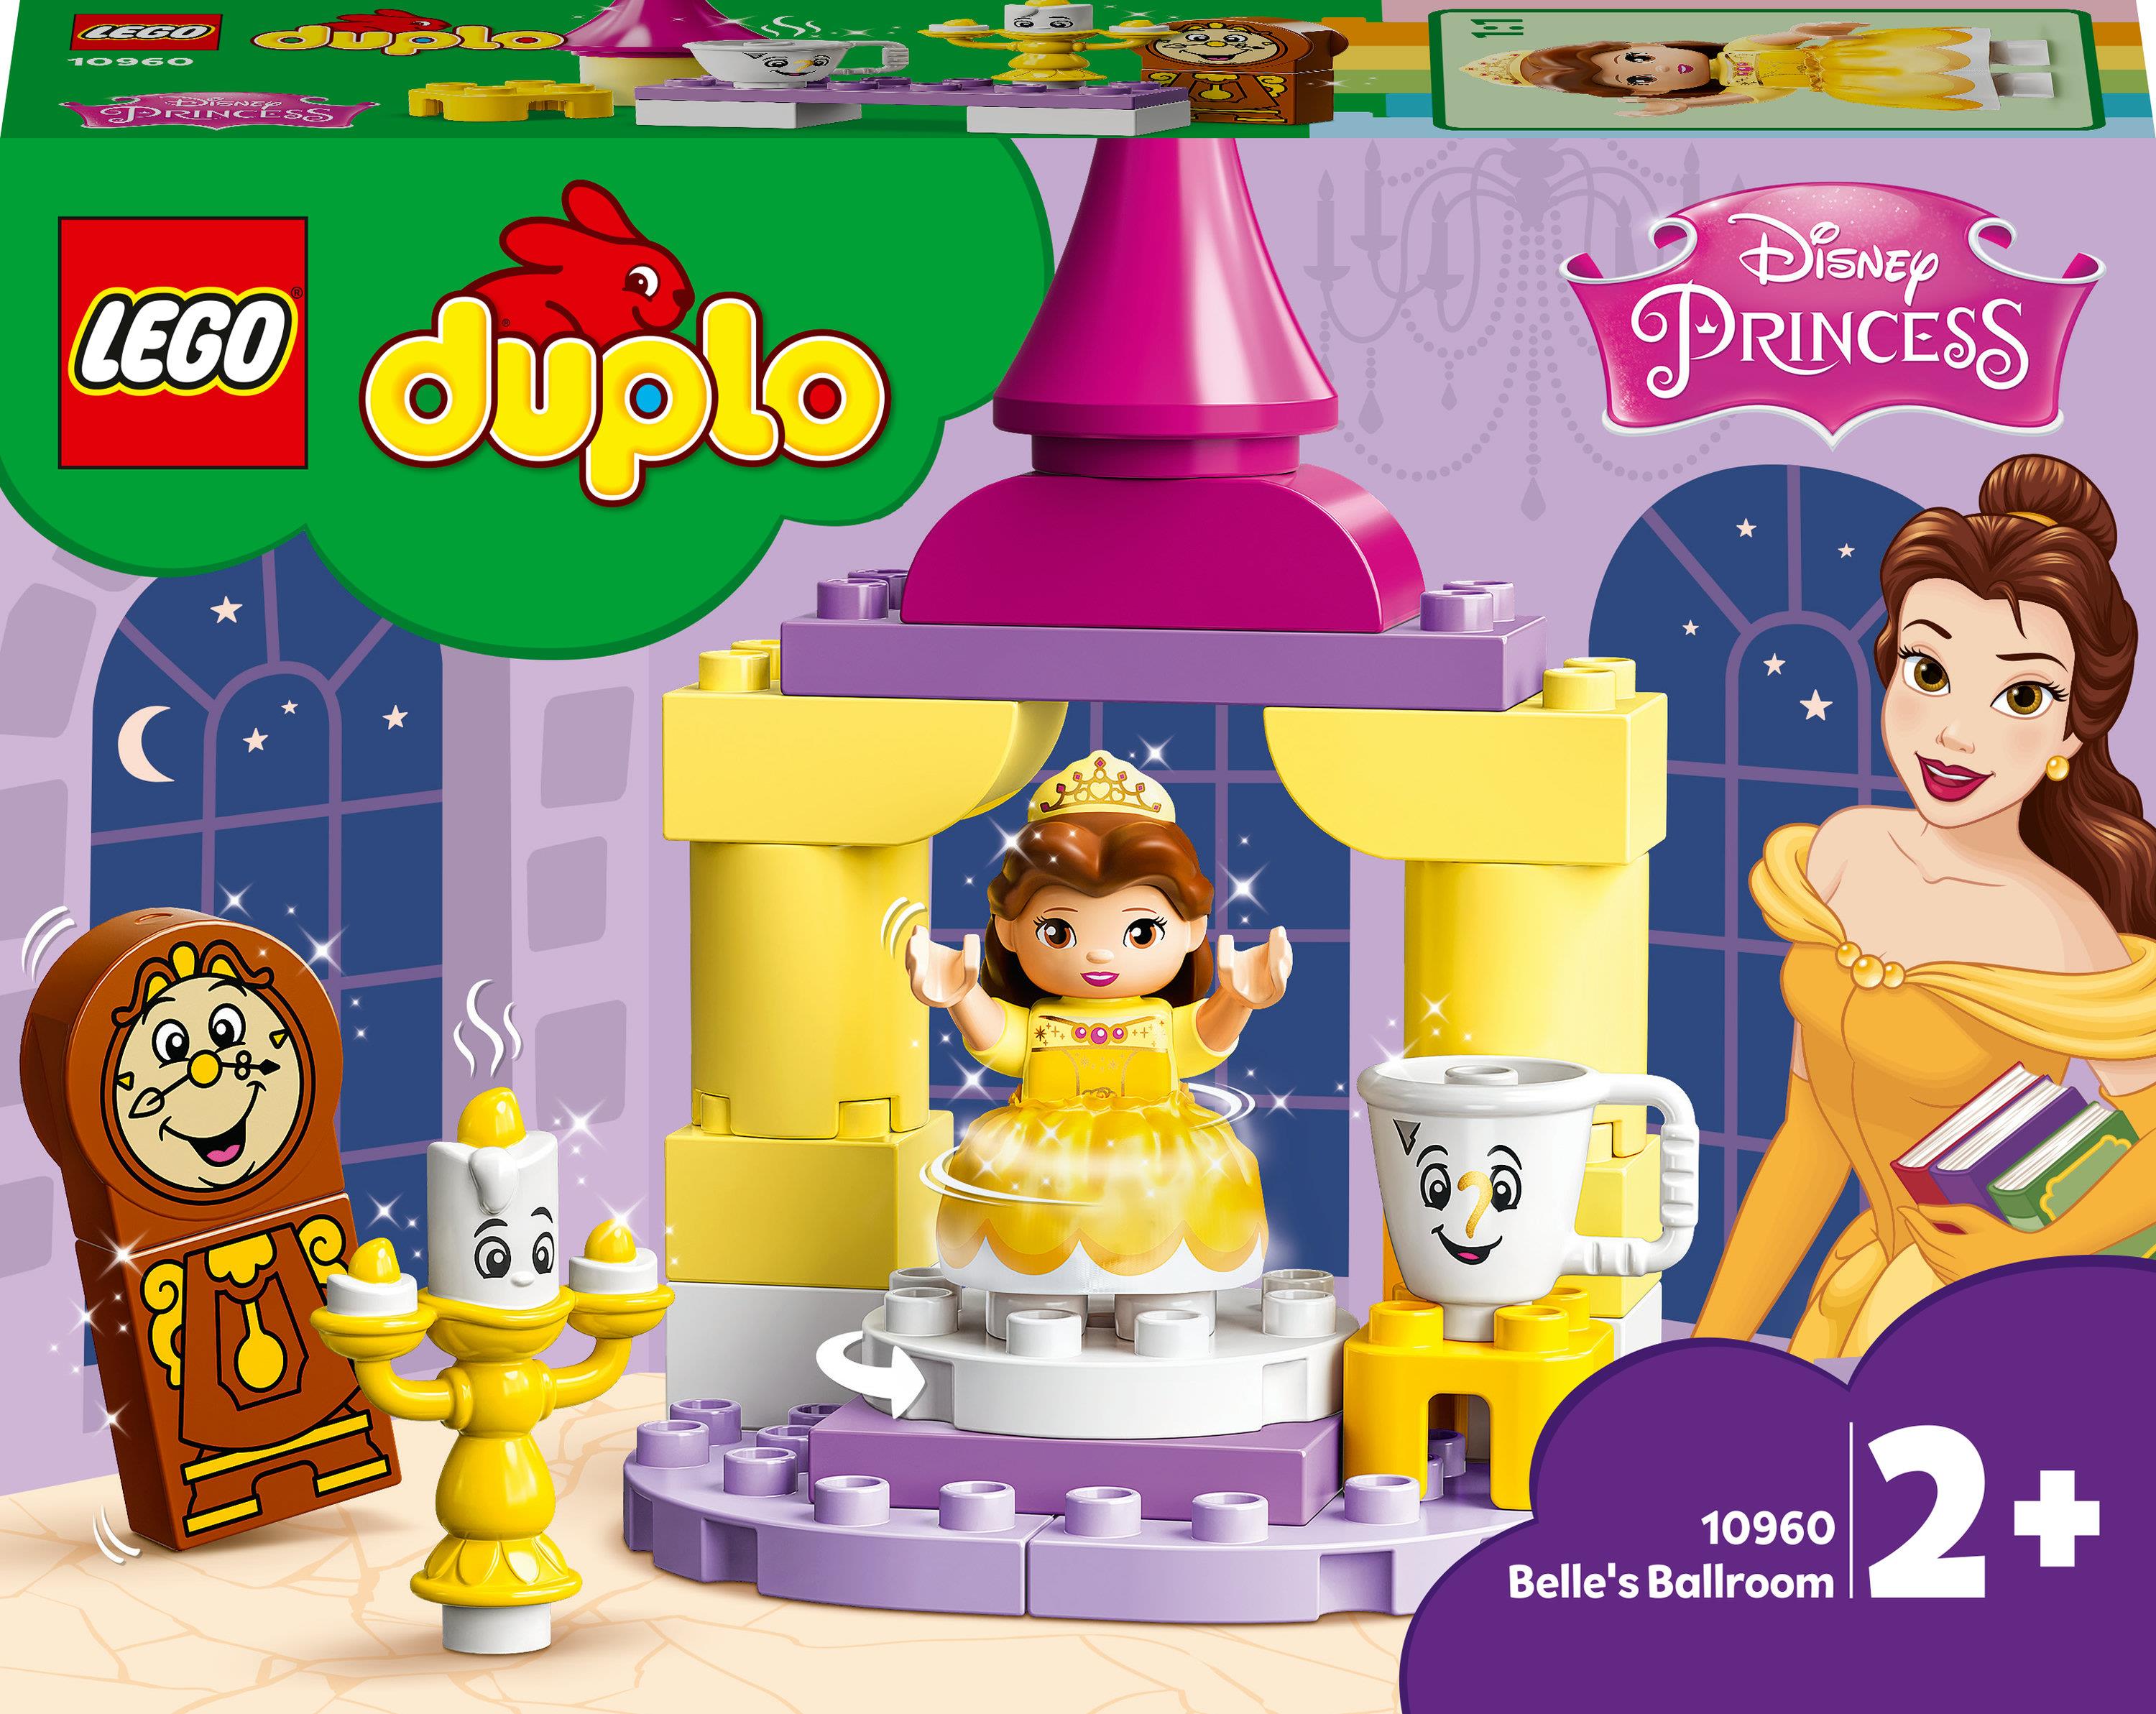 LEGO Duplo Disney Princess